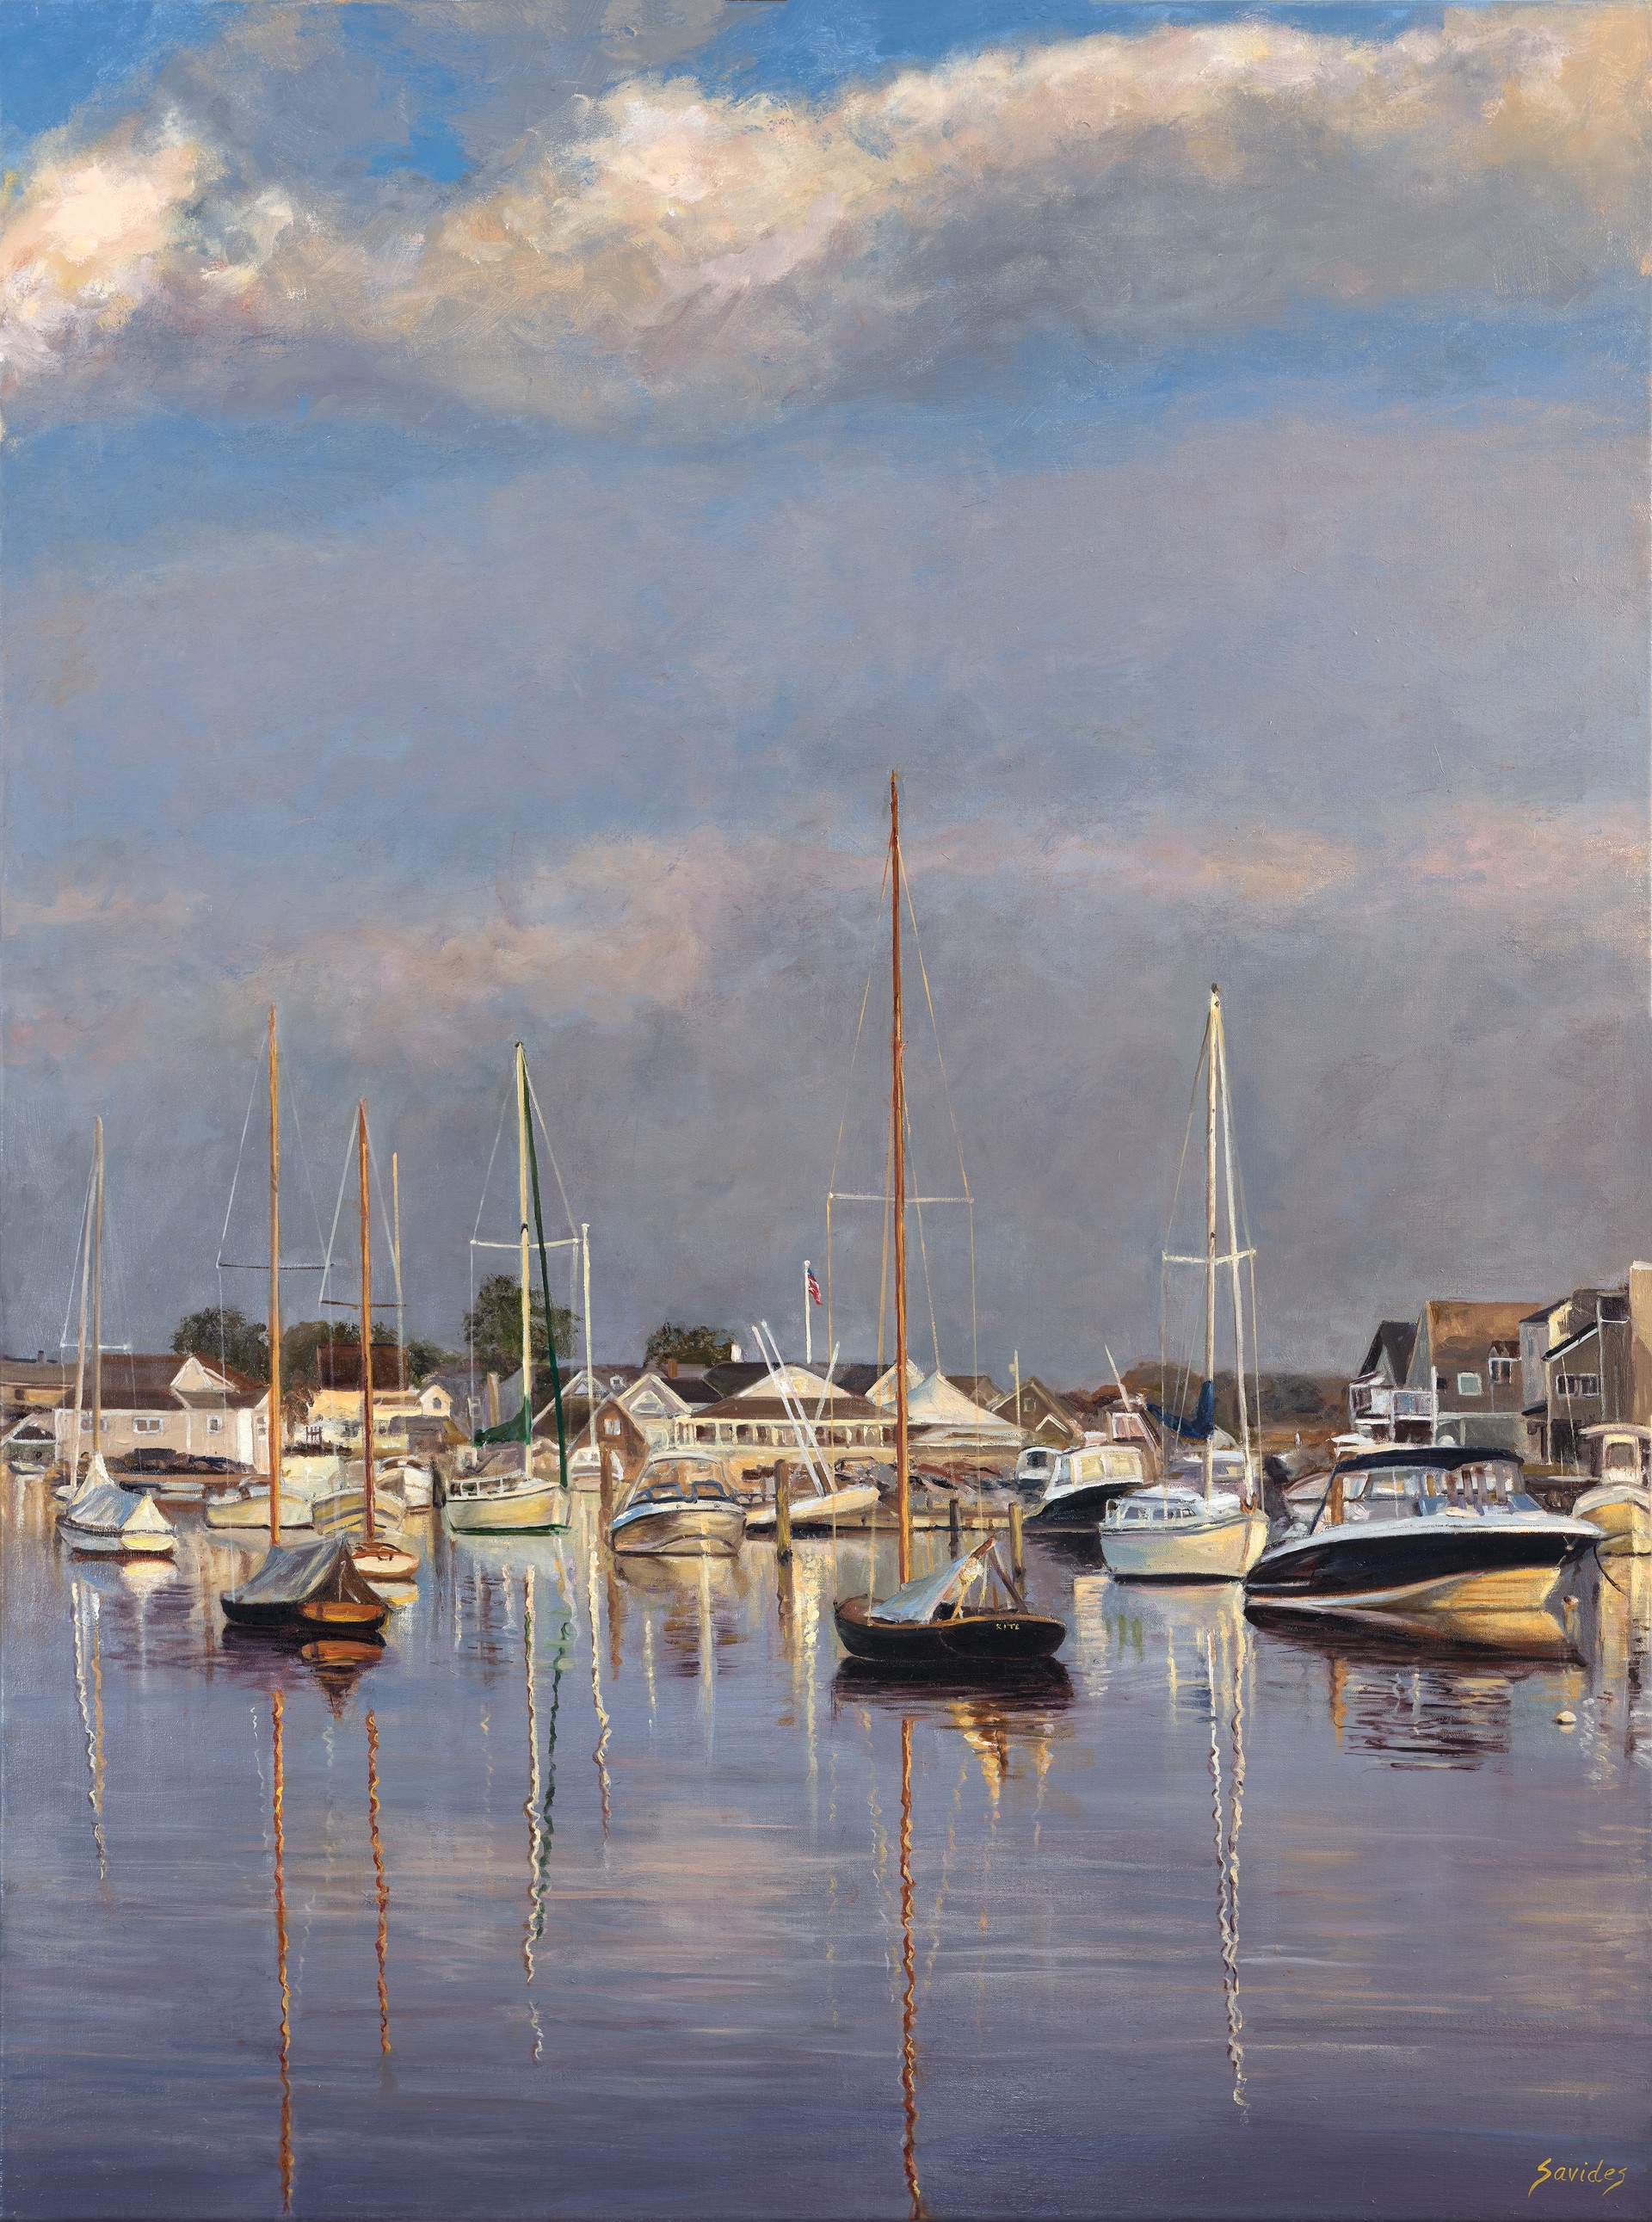 Stillness on the Harbor by Trish Savides